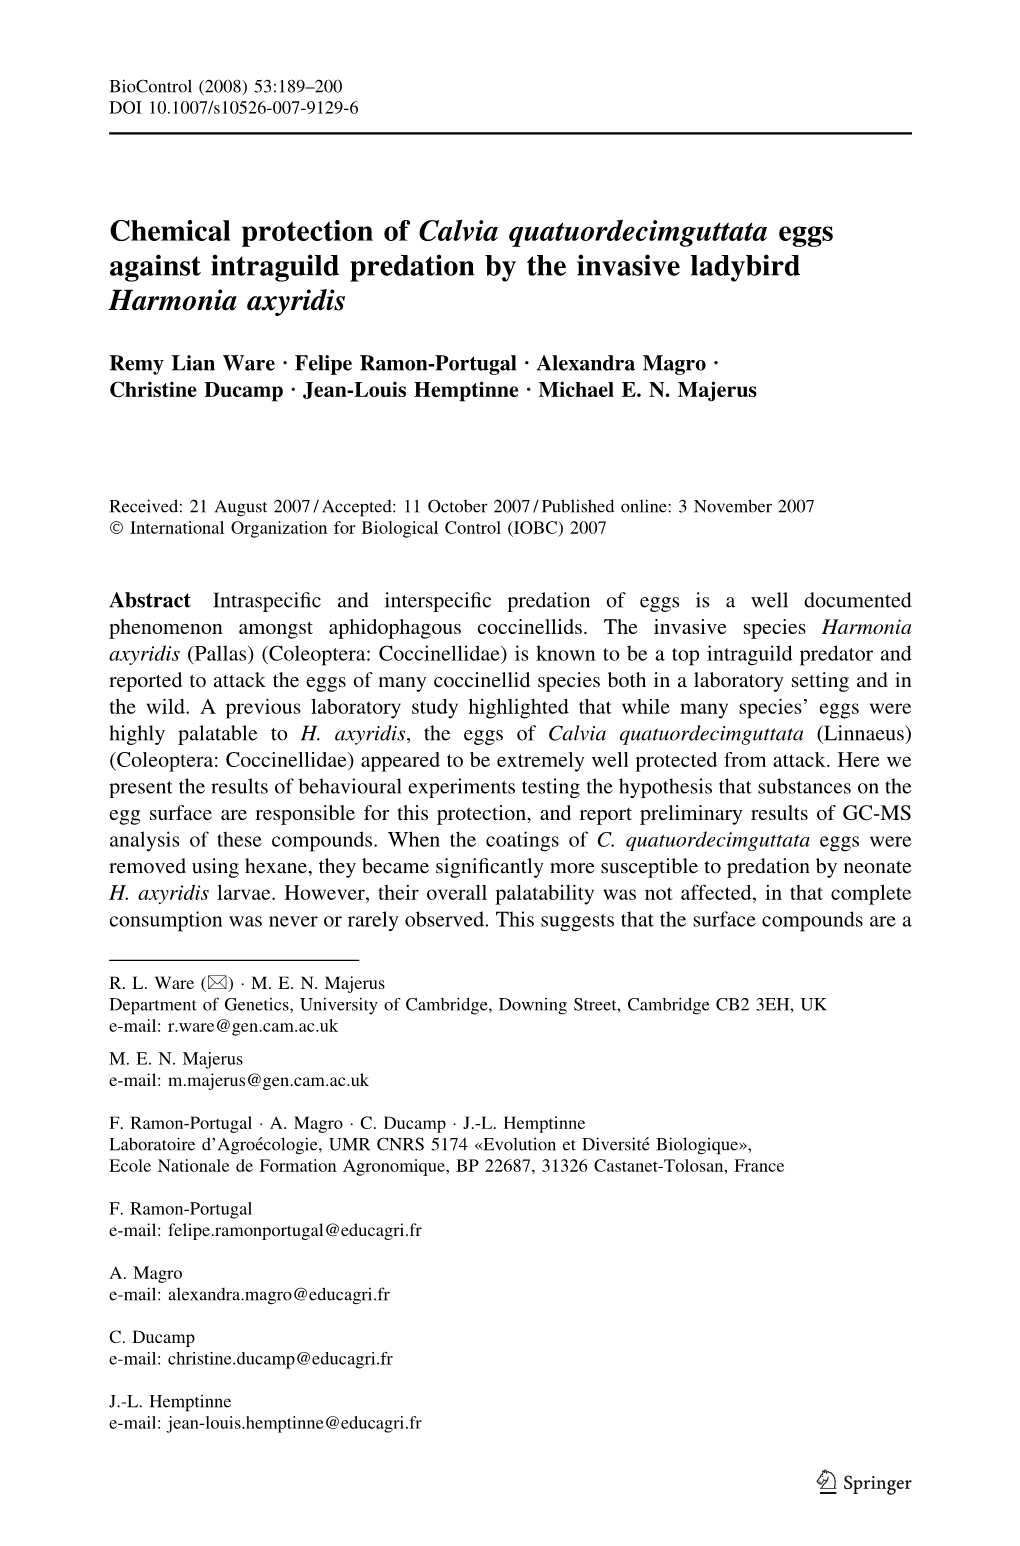 Chemical Protection of Calvia Quatuordecimguttata Eggs Against Intraguild Predation by the Invasive Ladybird Harmonia Axyridis